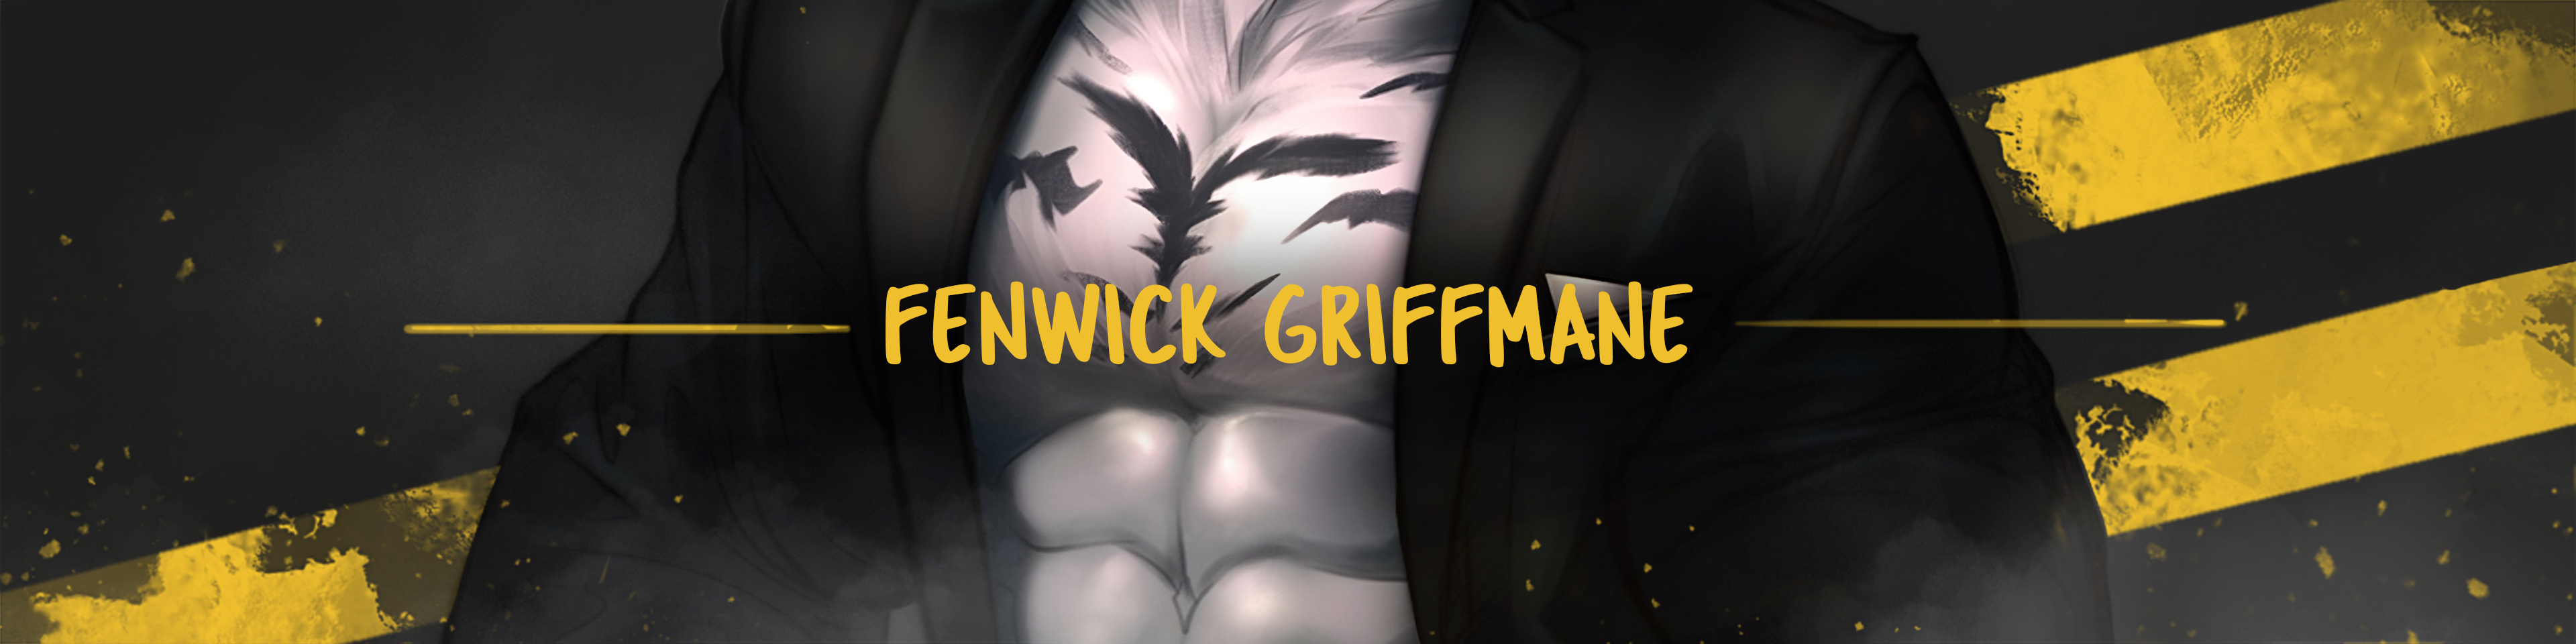 Fenwick Griffmane Suit Grunge Industrial Aesthetic Banner